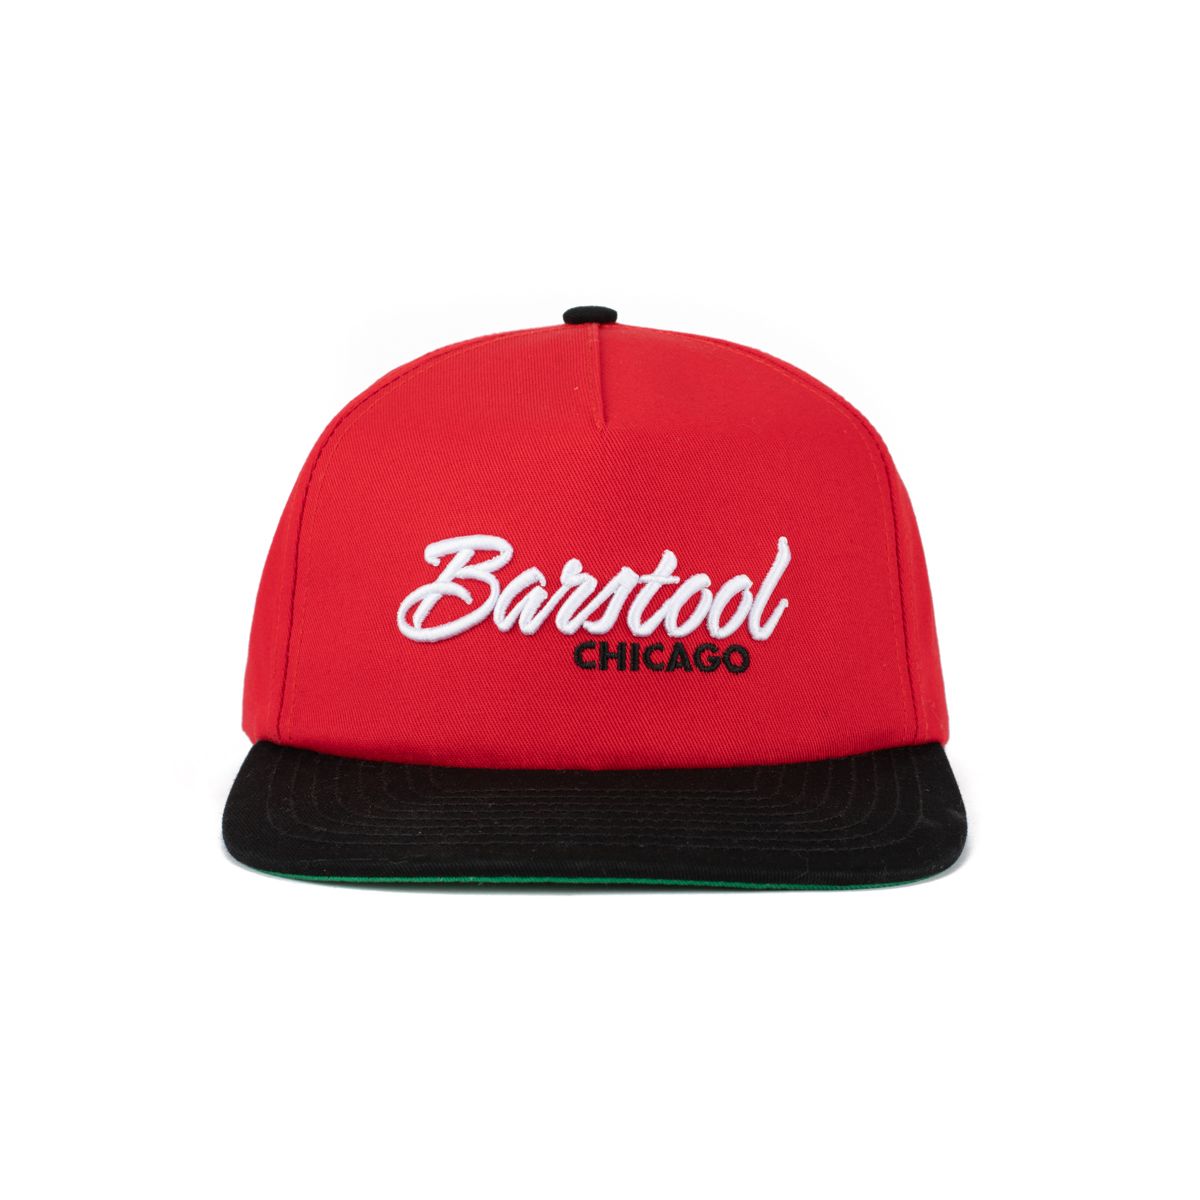 Barstool Chicago Retro Snapback Hat-Hats-Barstool Chicago-Black-One Size-Barstool Sports